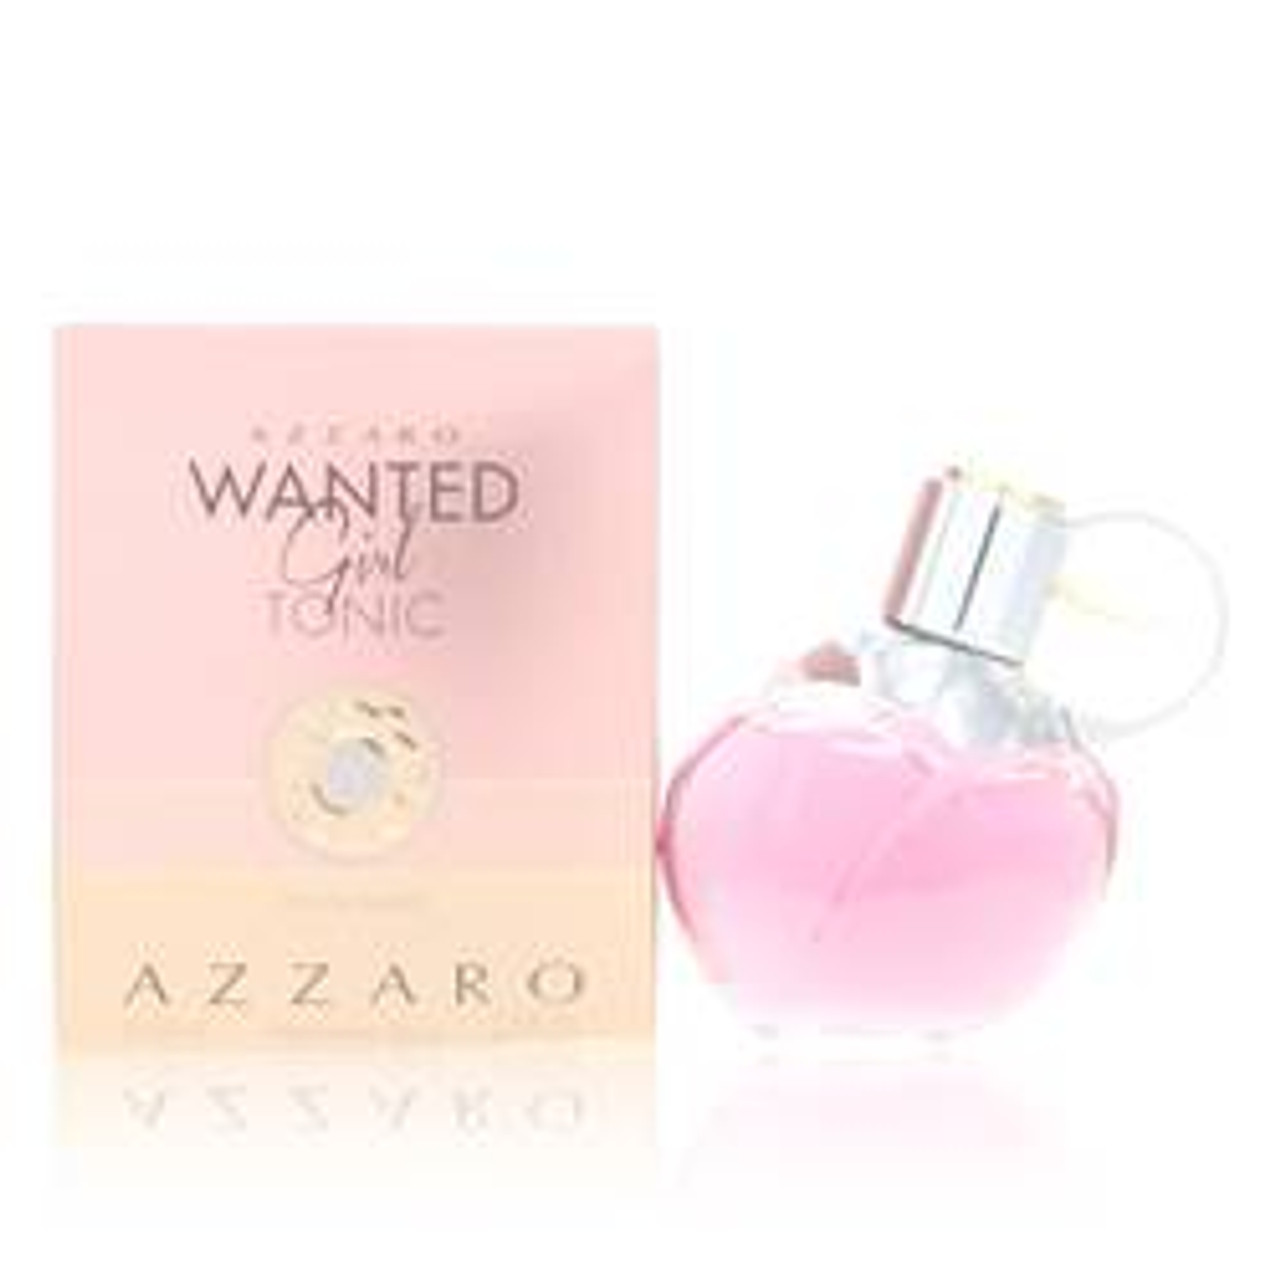 Azzaro Wanted Girl Tonic Perfume By Azzaro Eau De Toilette Spray 2.7 oz for Women - [From 88.00 - Choose pk Qty ] - *Ships from Miami